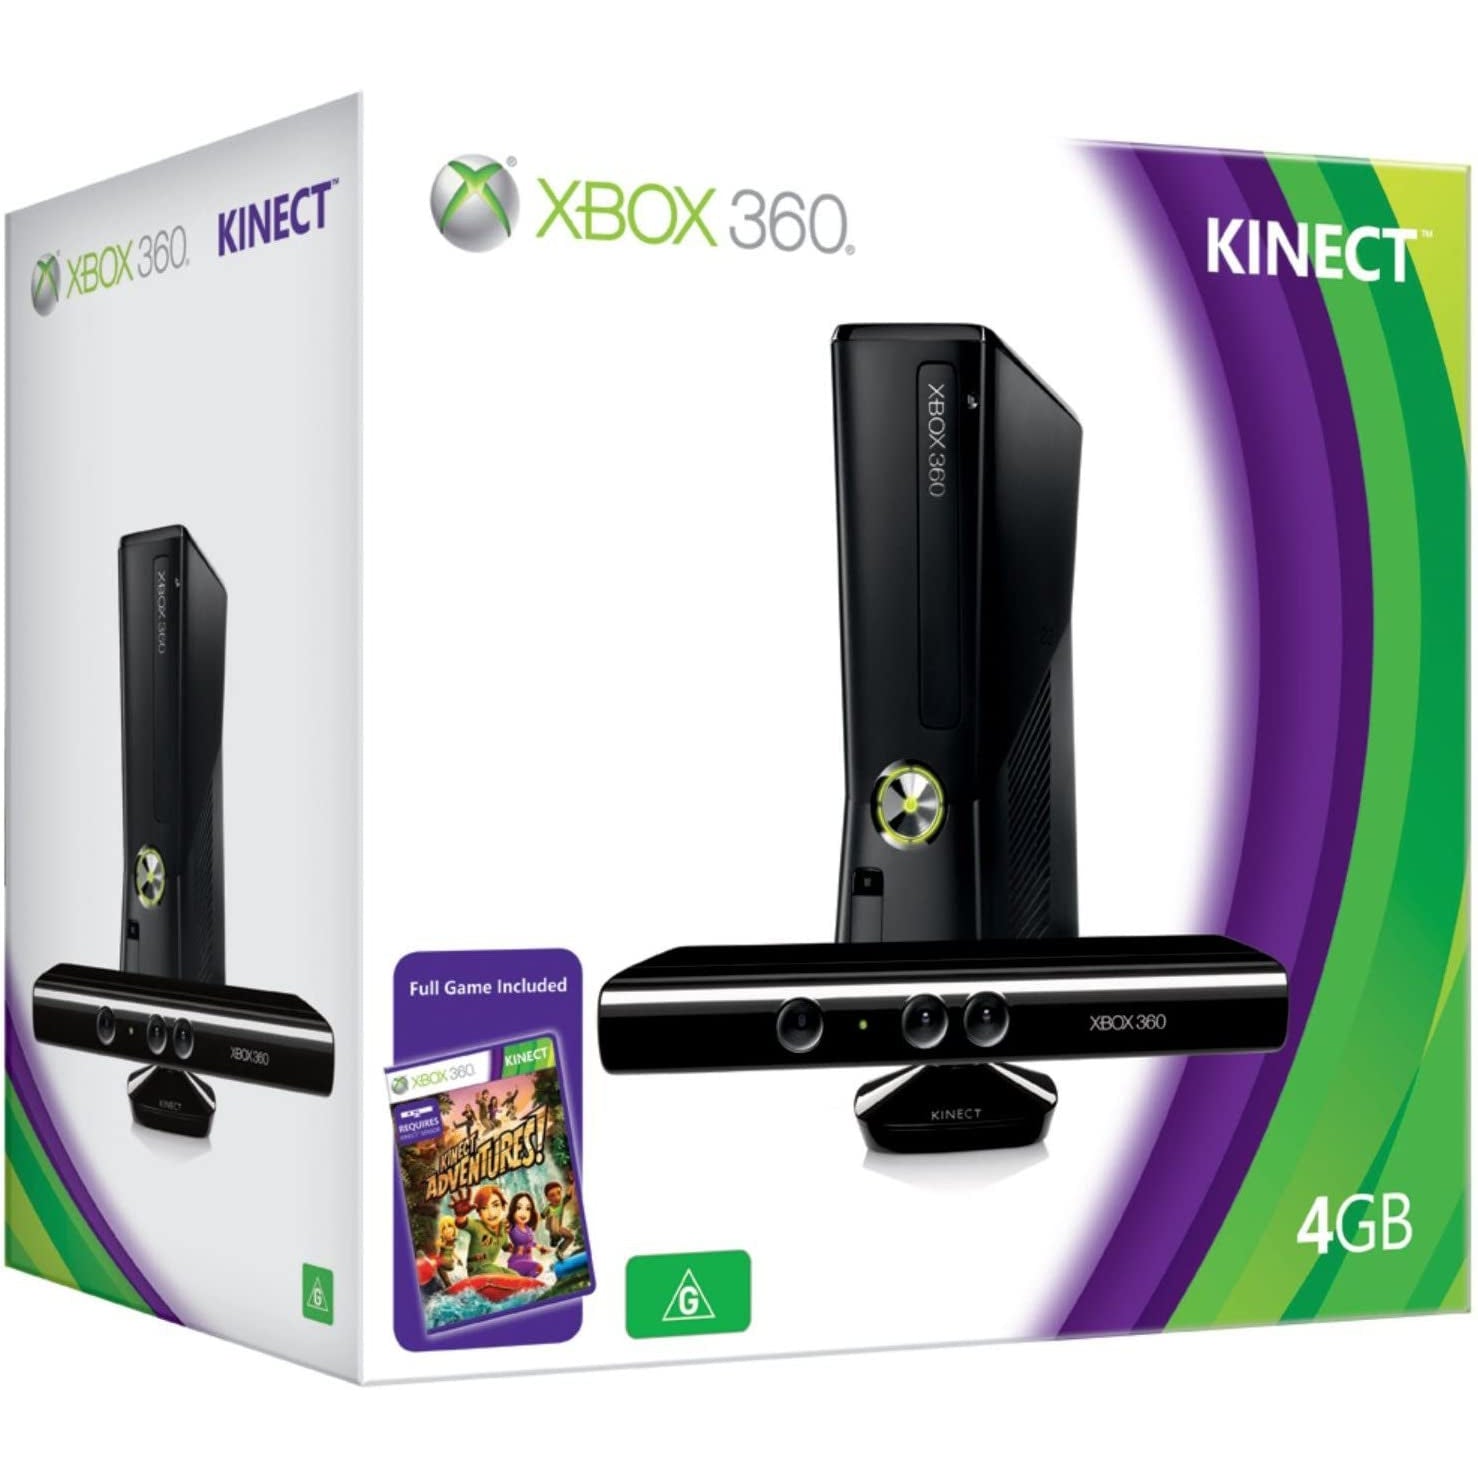 Microsoft Xbox 360 4GB Console Includes Kinect Adventures & Carnival Games - Refurbished Pristine